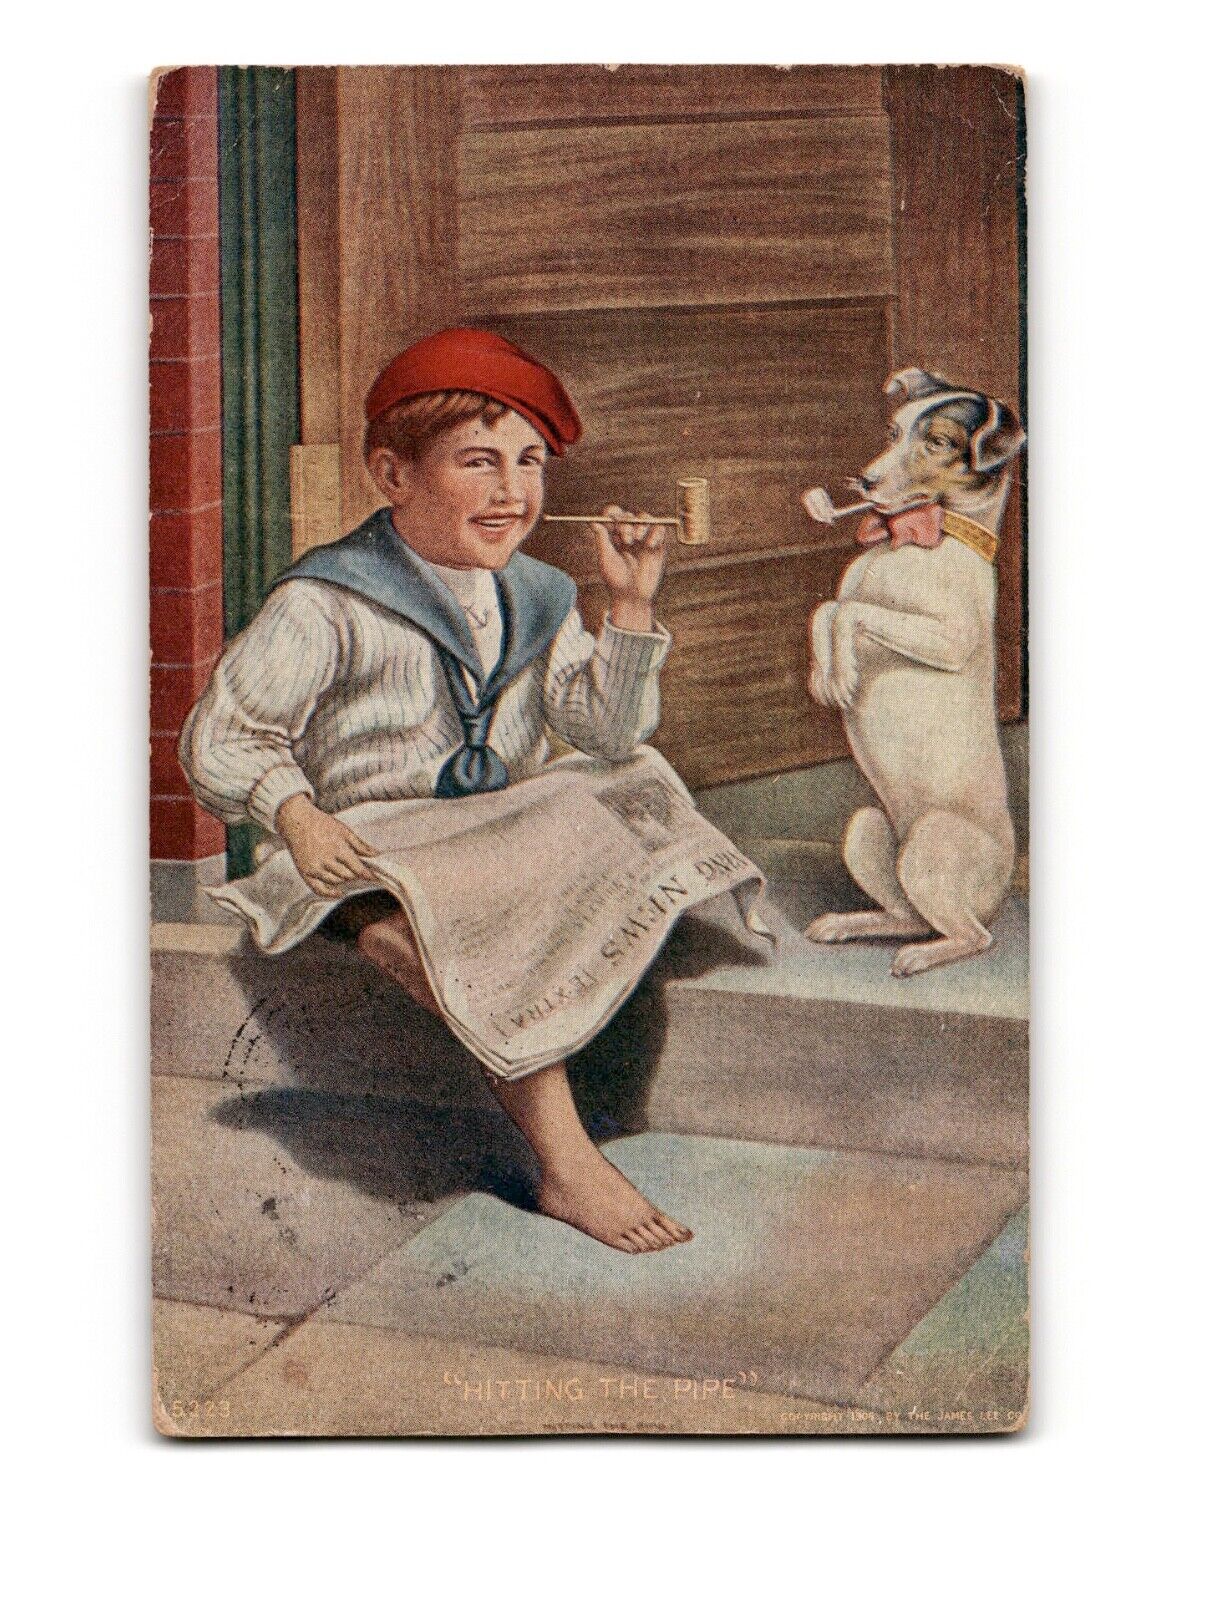 1907 Hitting the Pipe Boy & Dog Vintage Postcard